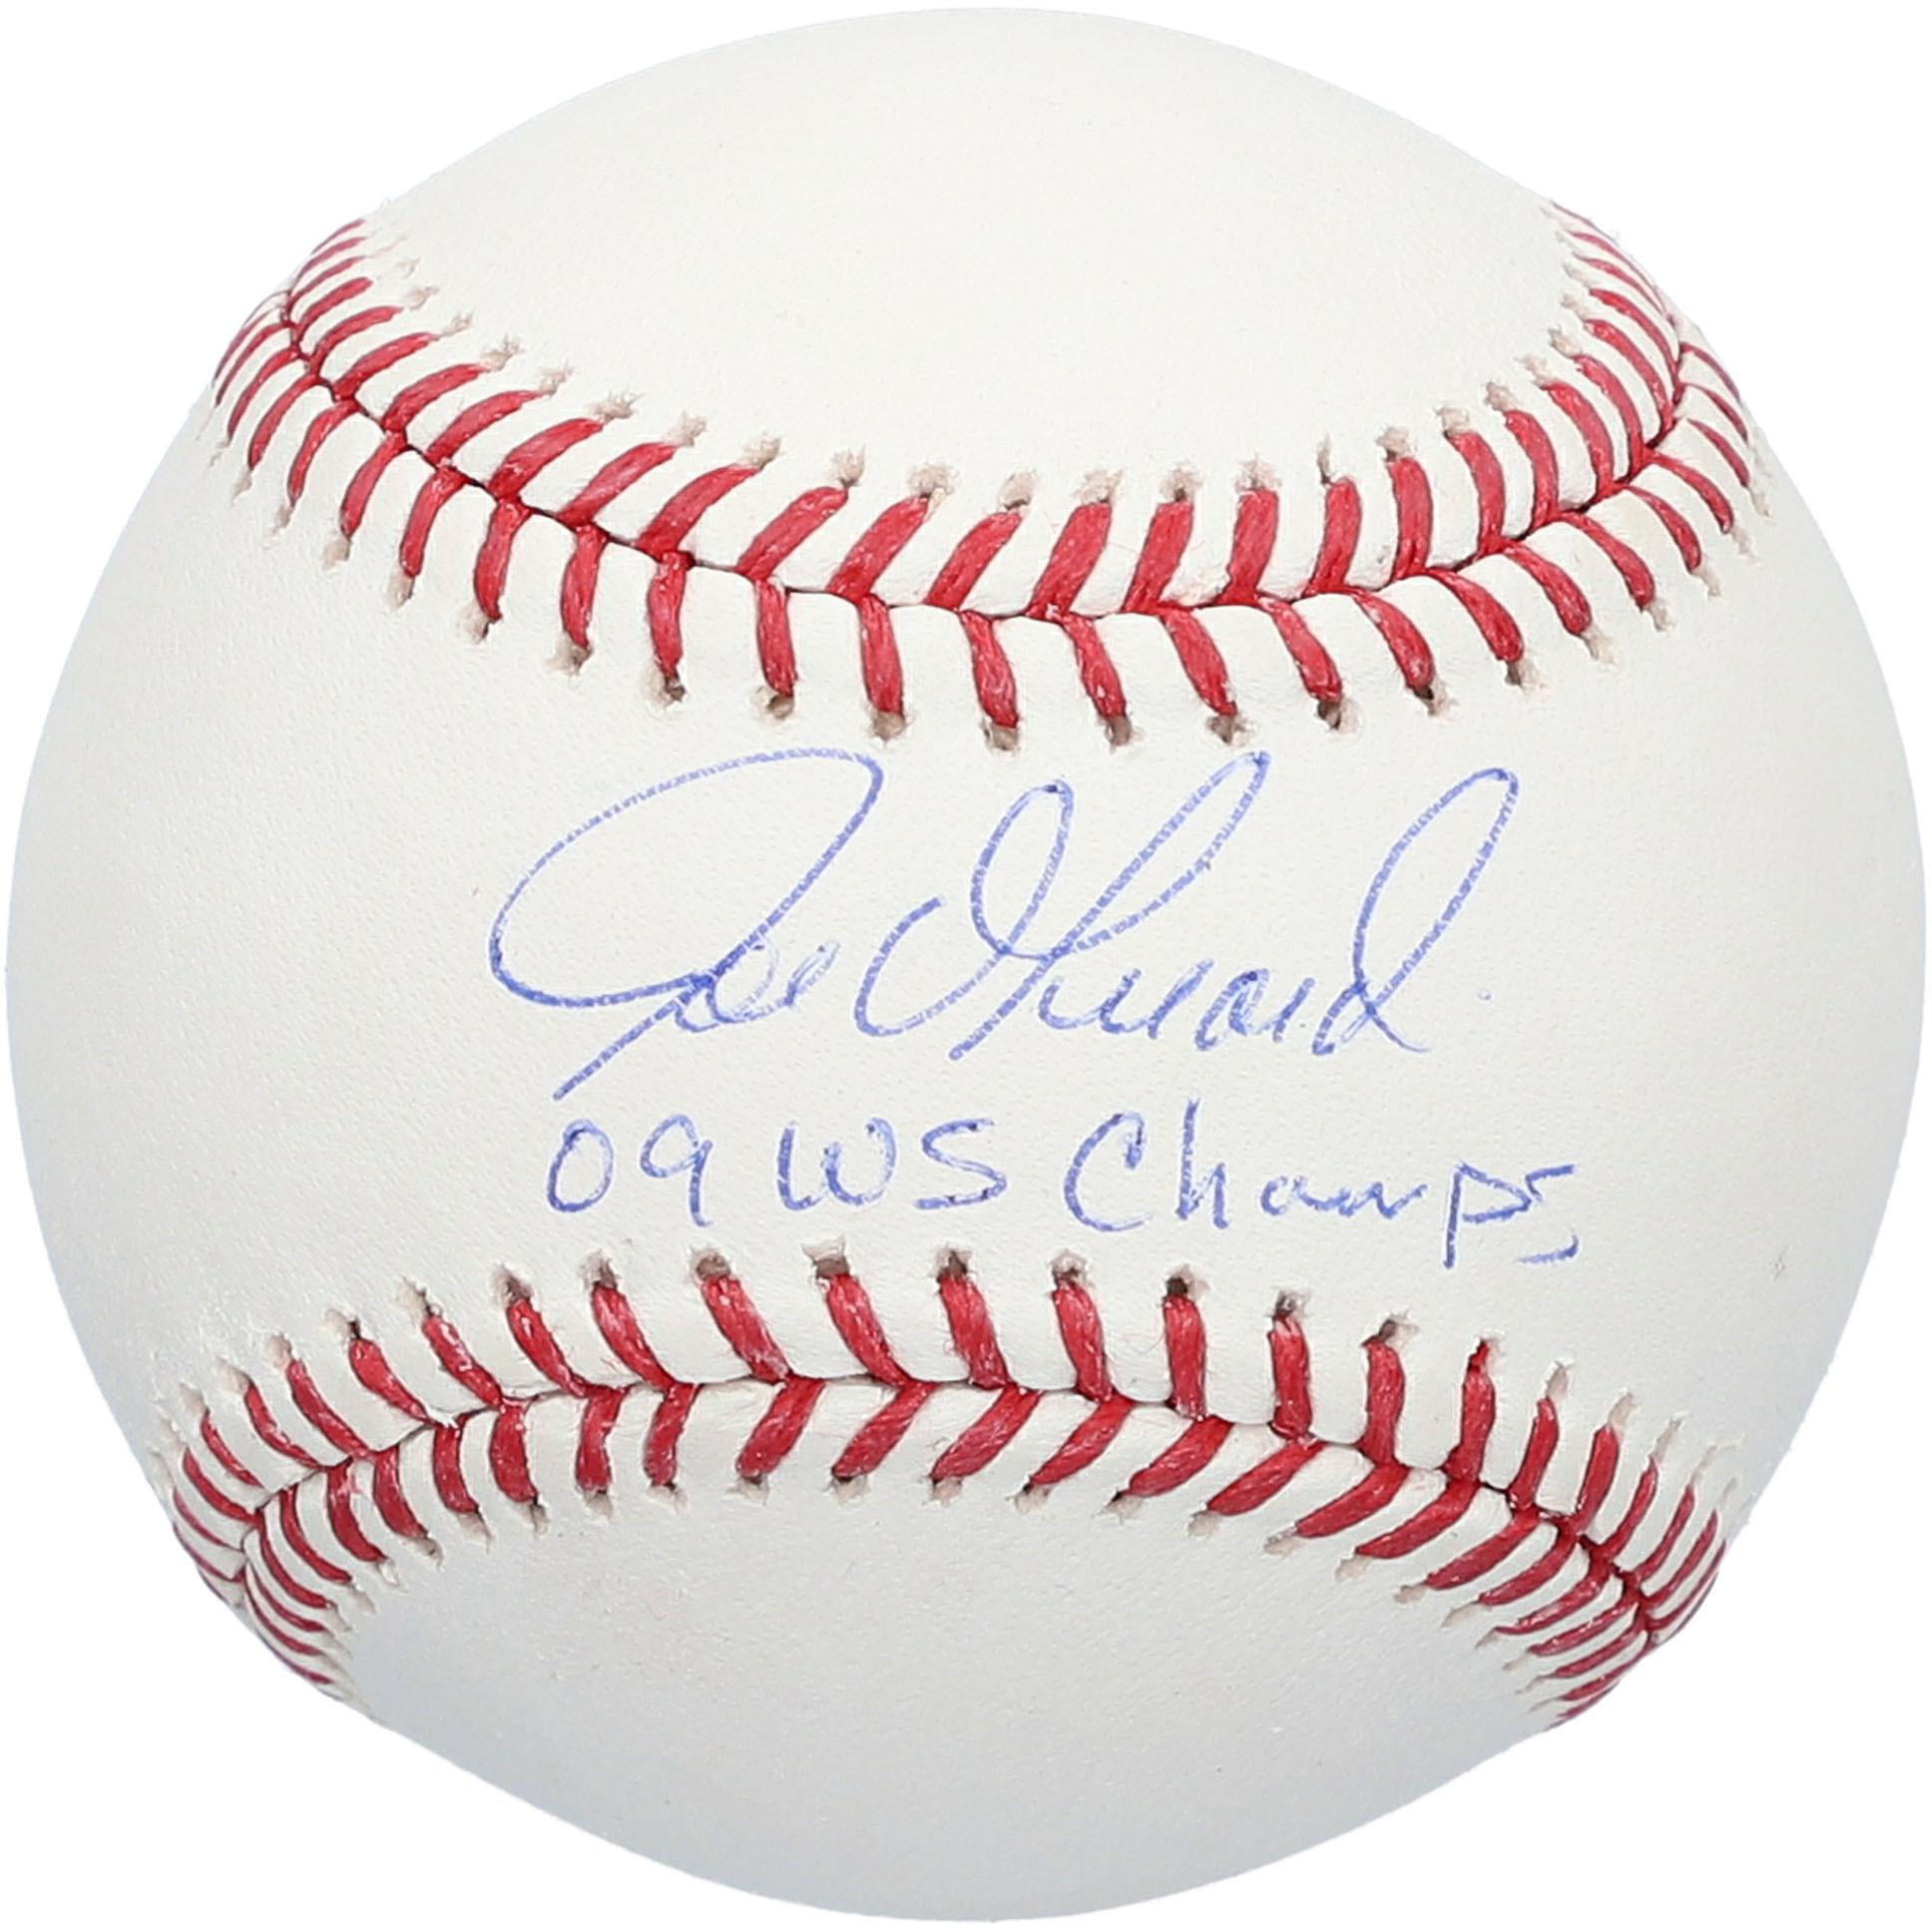 joe girardi autographed baseball